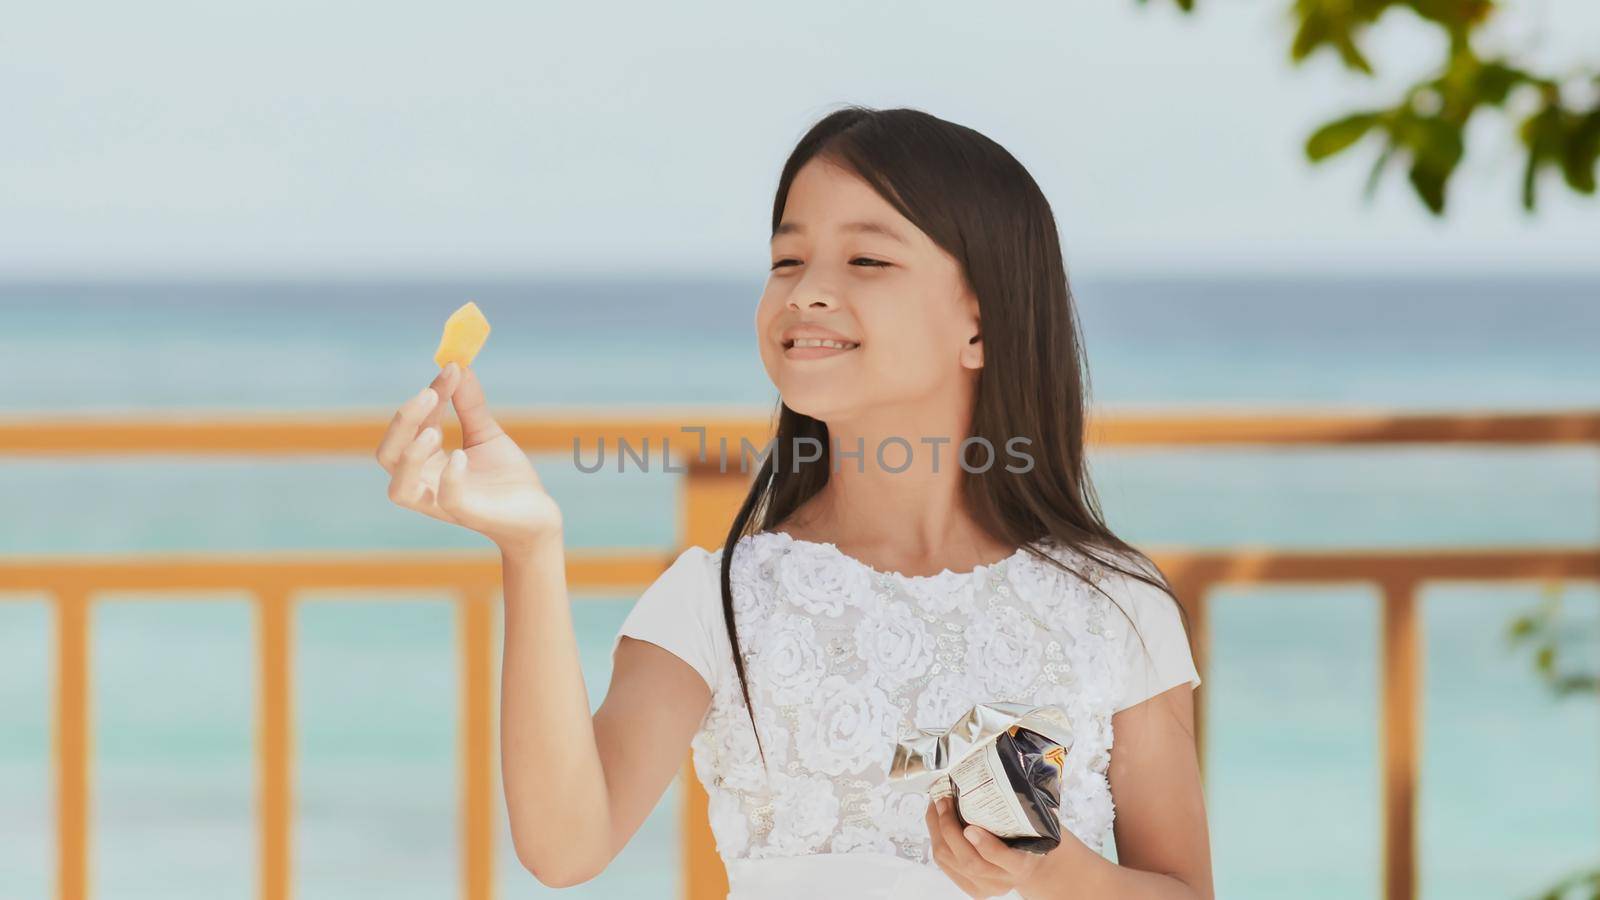 Philippine schoolgirl in white dress smiles, eating crispy potato chips. Tropical landscape. The palms. Summer